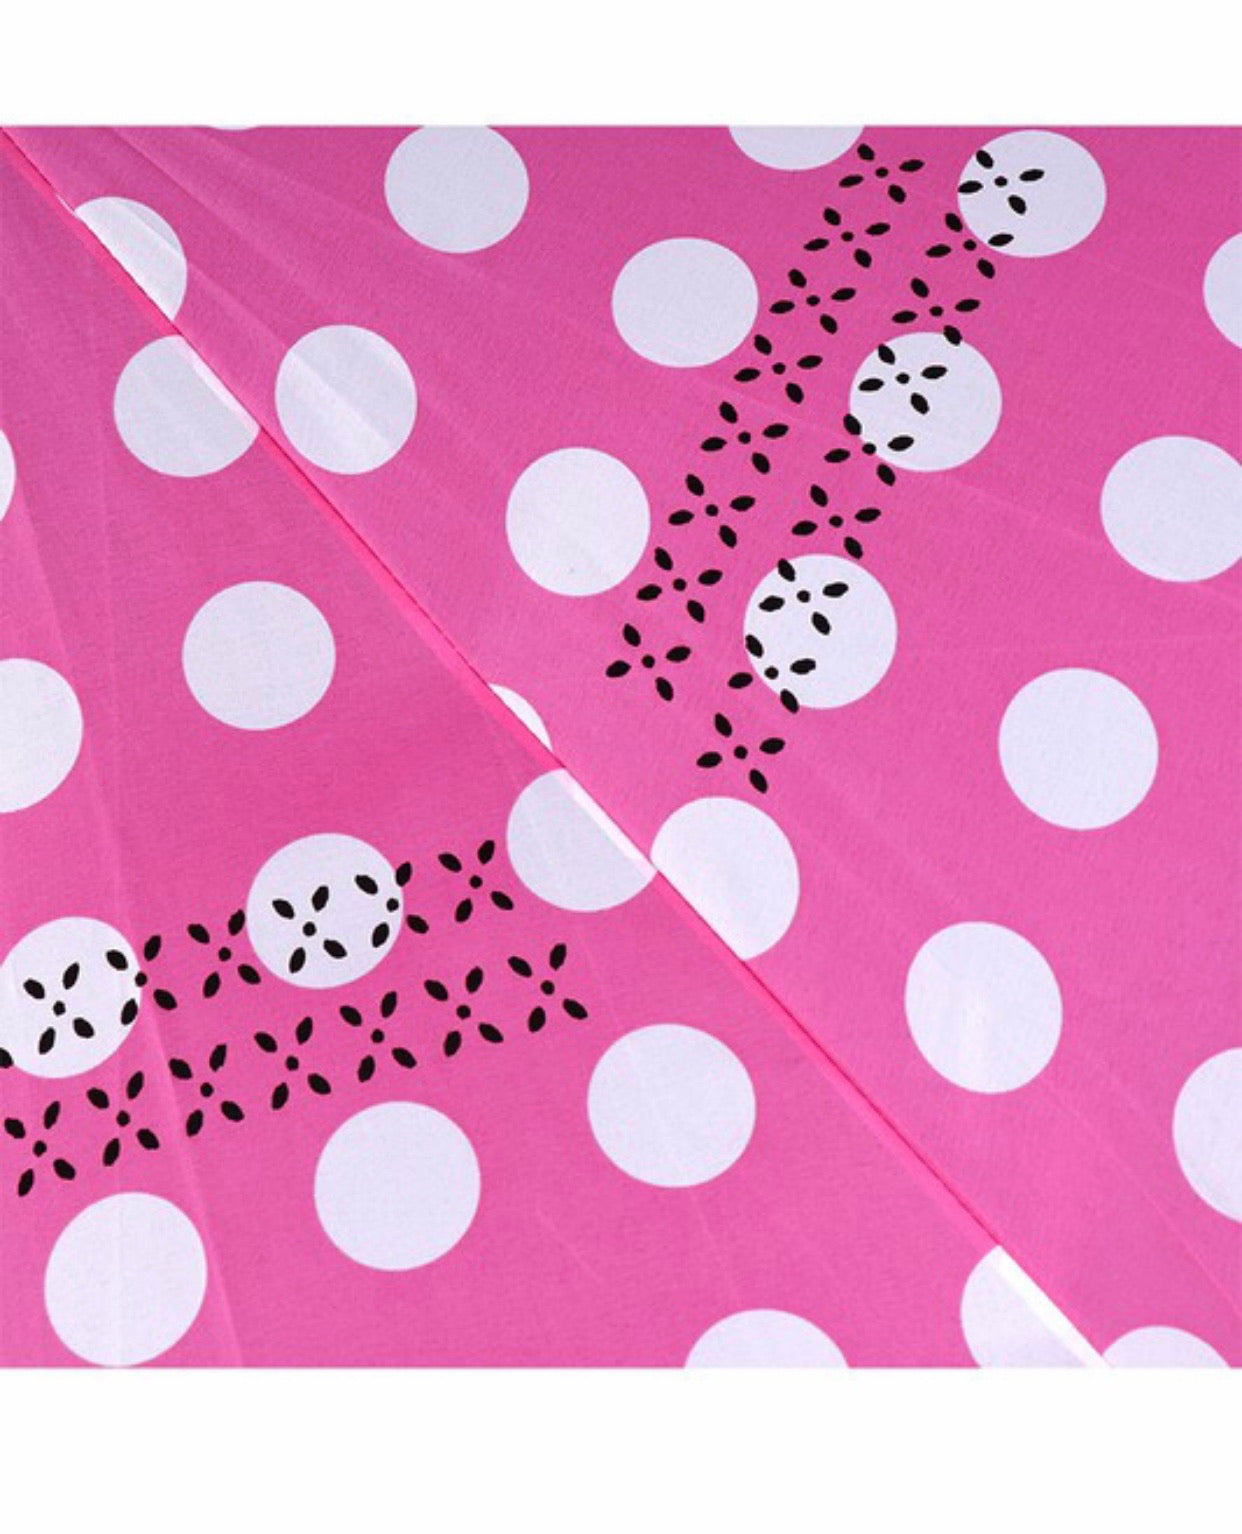 Pink polka dot umbrella - Alexa Maries